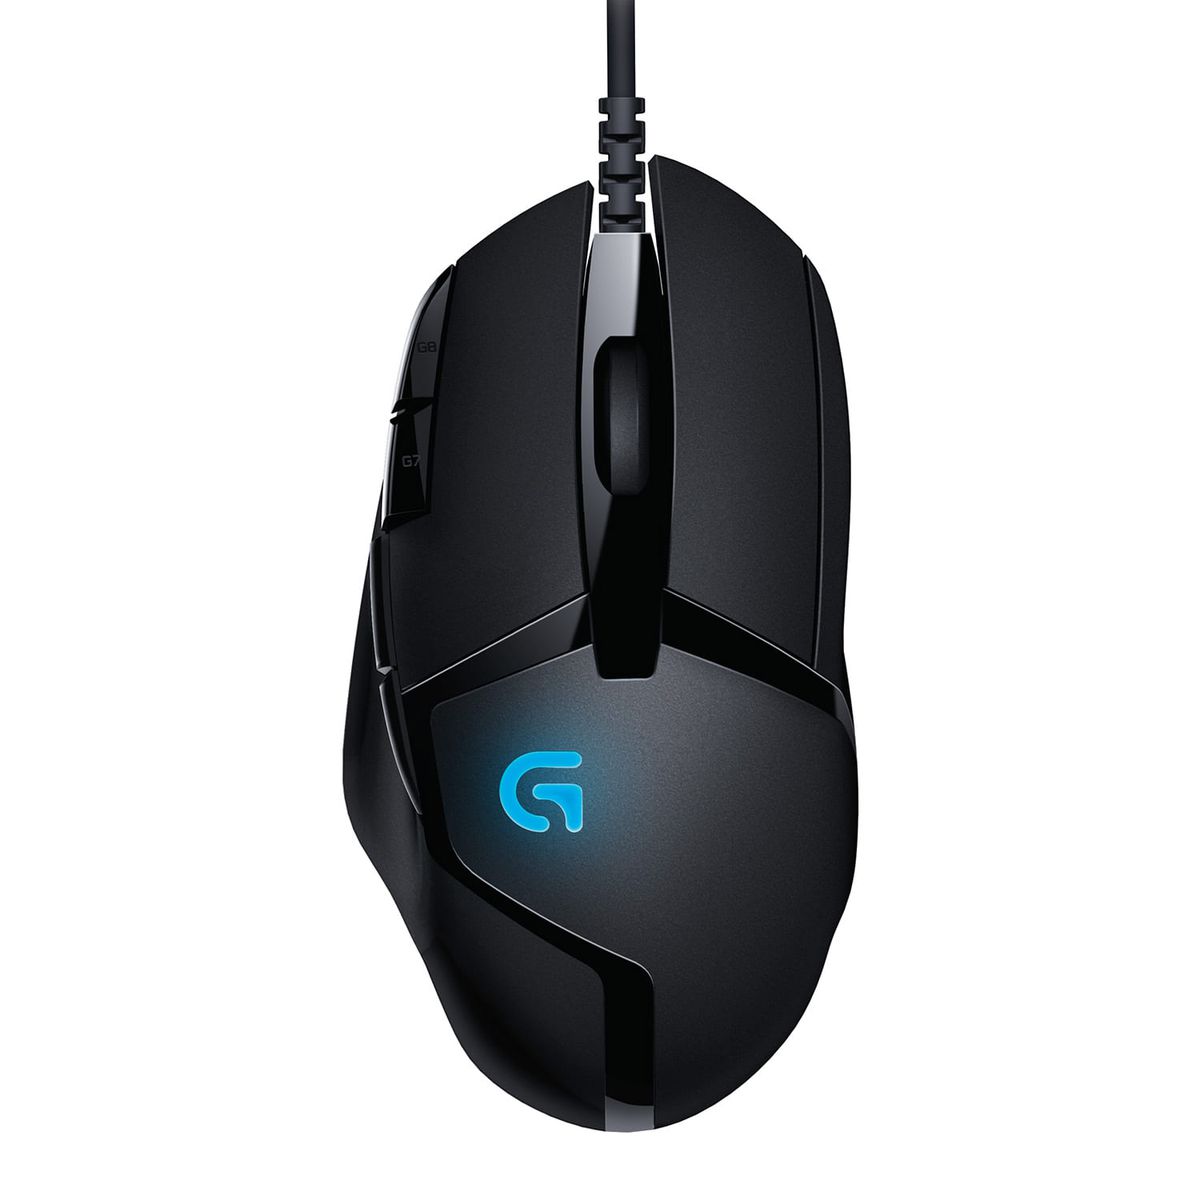 Logitech® G502 HERO High Performance Gaming Mouse - USB